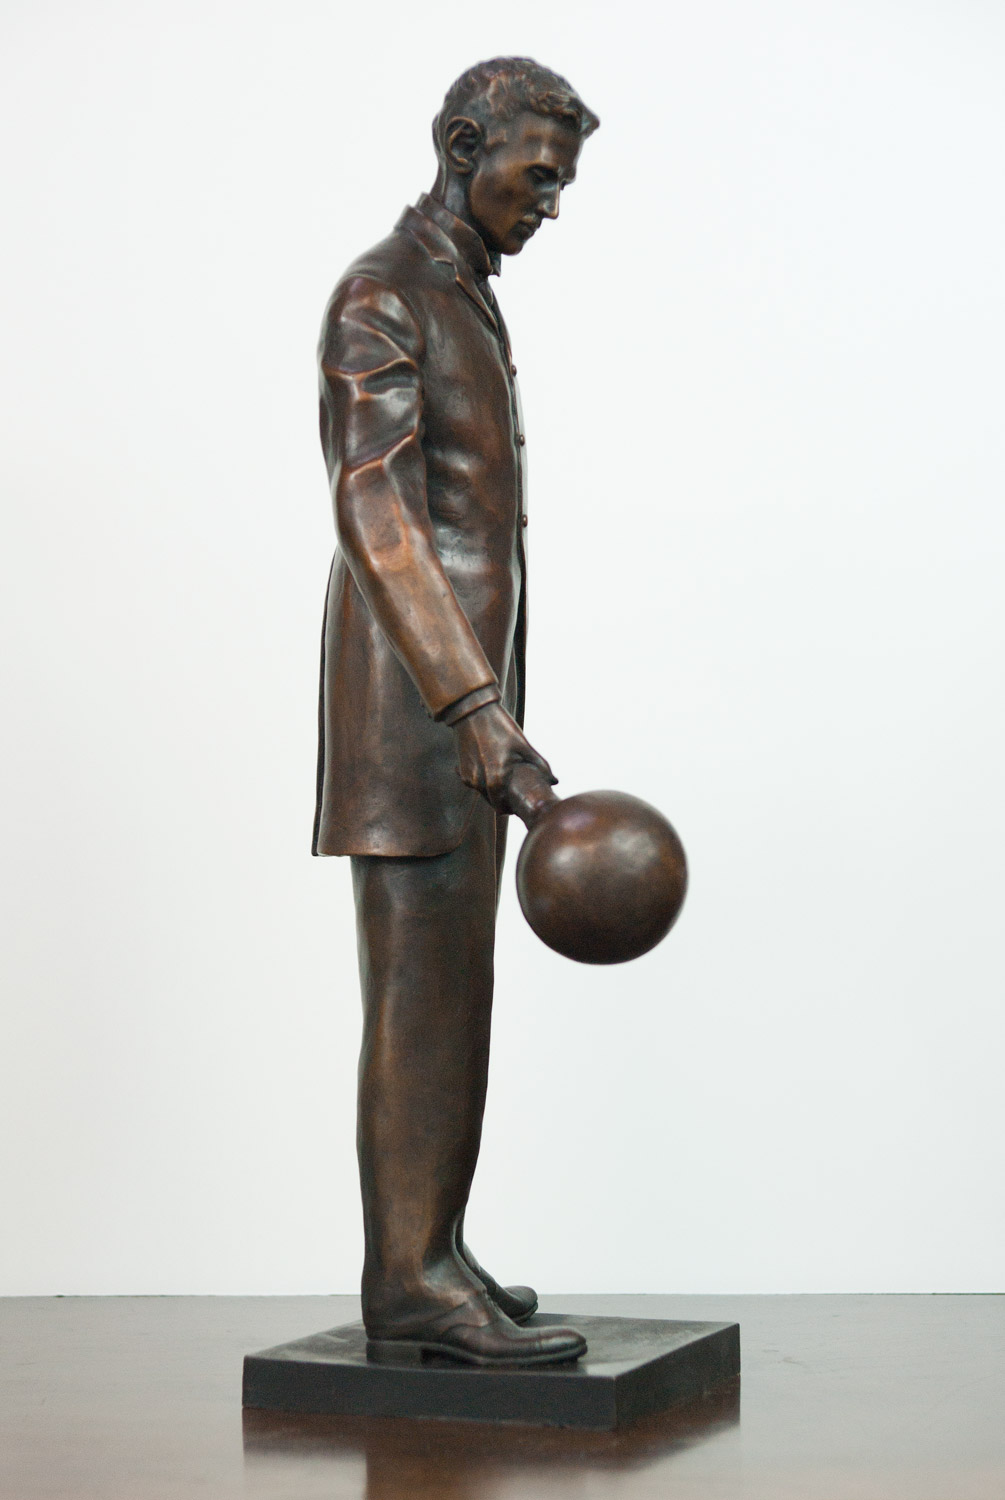 18" Bronze Replica of "A Statue of Nikola Tesla in the Silicon Valley"